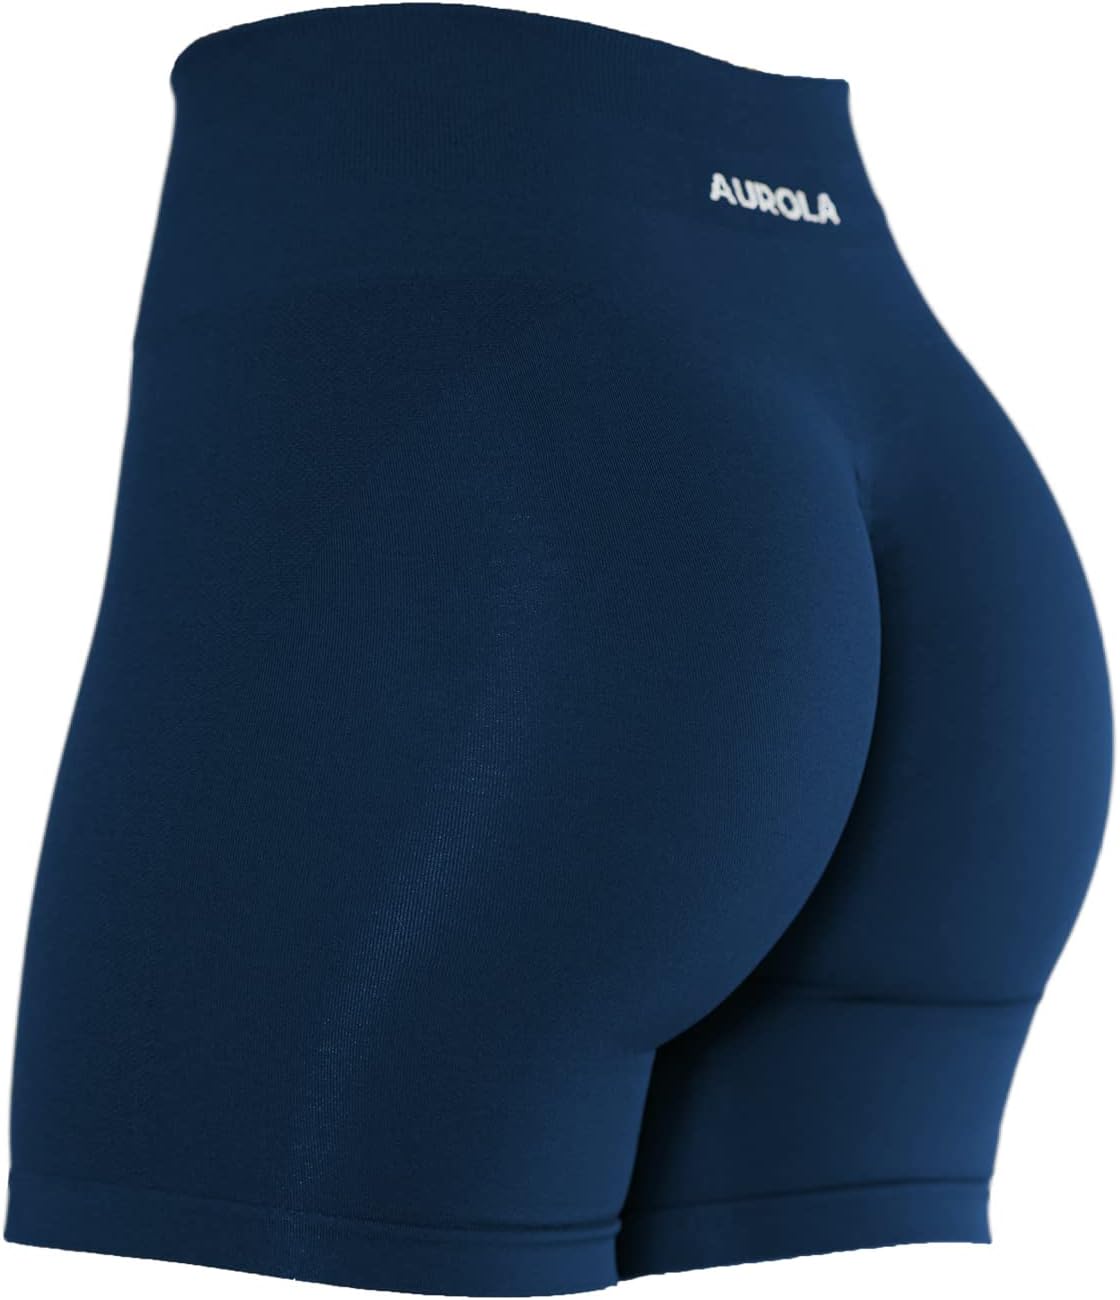 Alphalete amplify shorts in Tuxedo Blue  Clothes design, Gym shorts  womens, Shorts